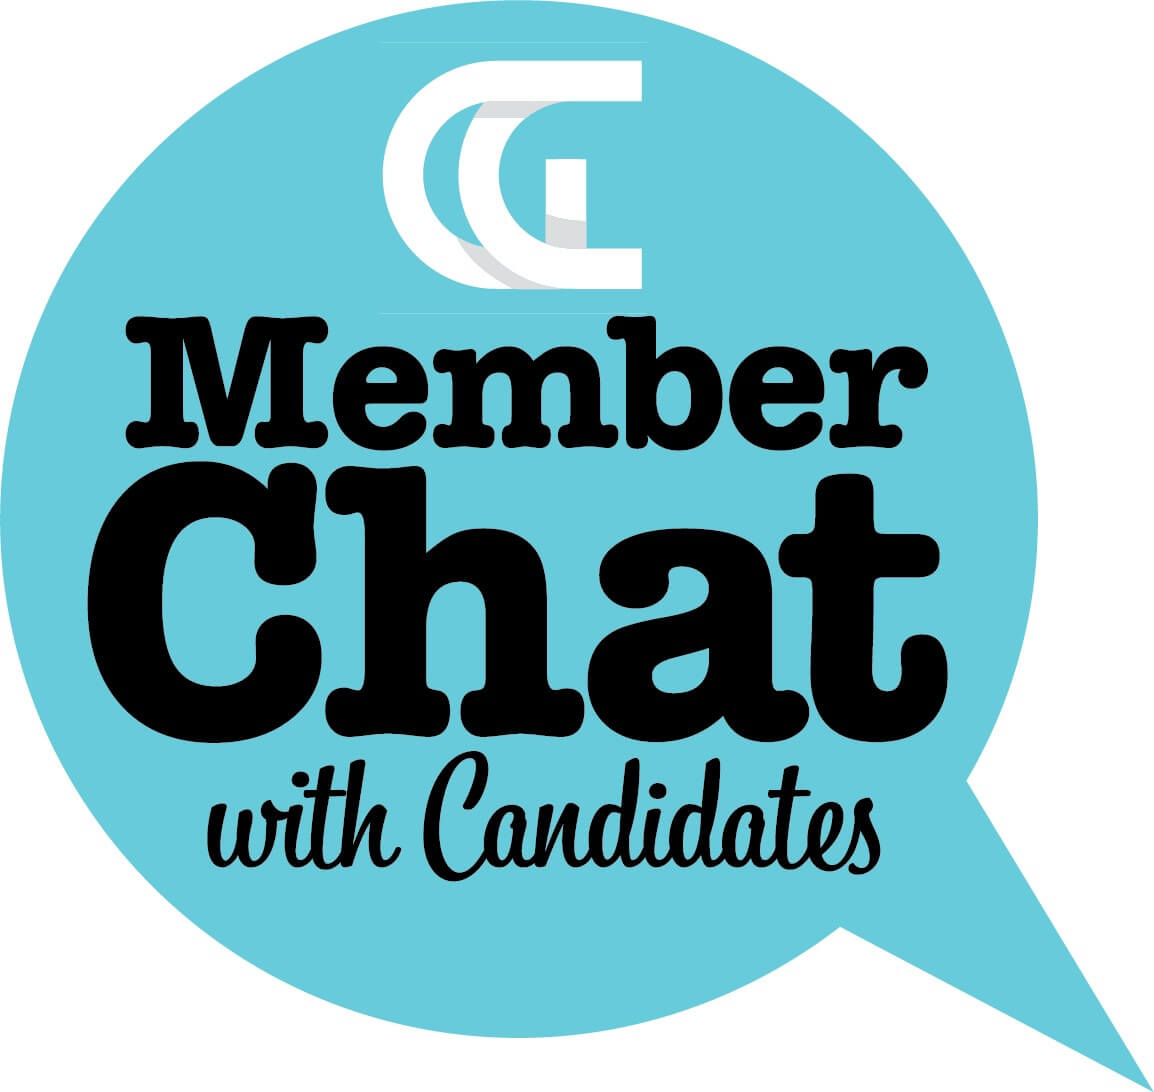 Member Chat Logo